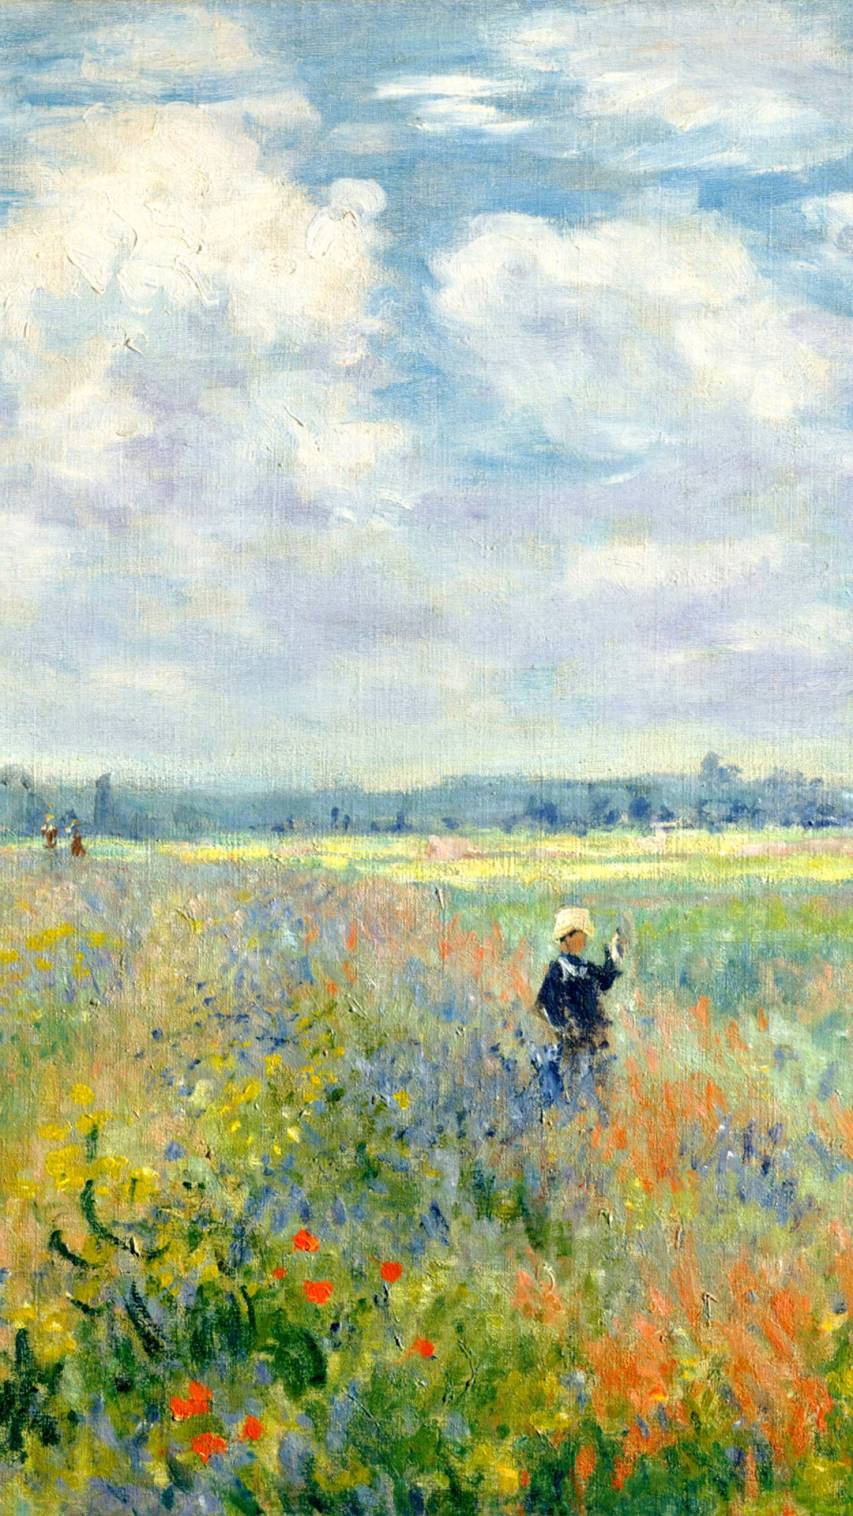 Pastel, Monet, Art, Watercolor iPhone image Backgrounds